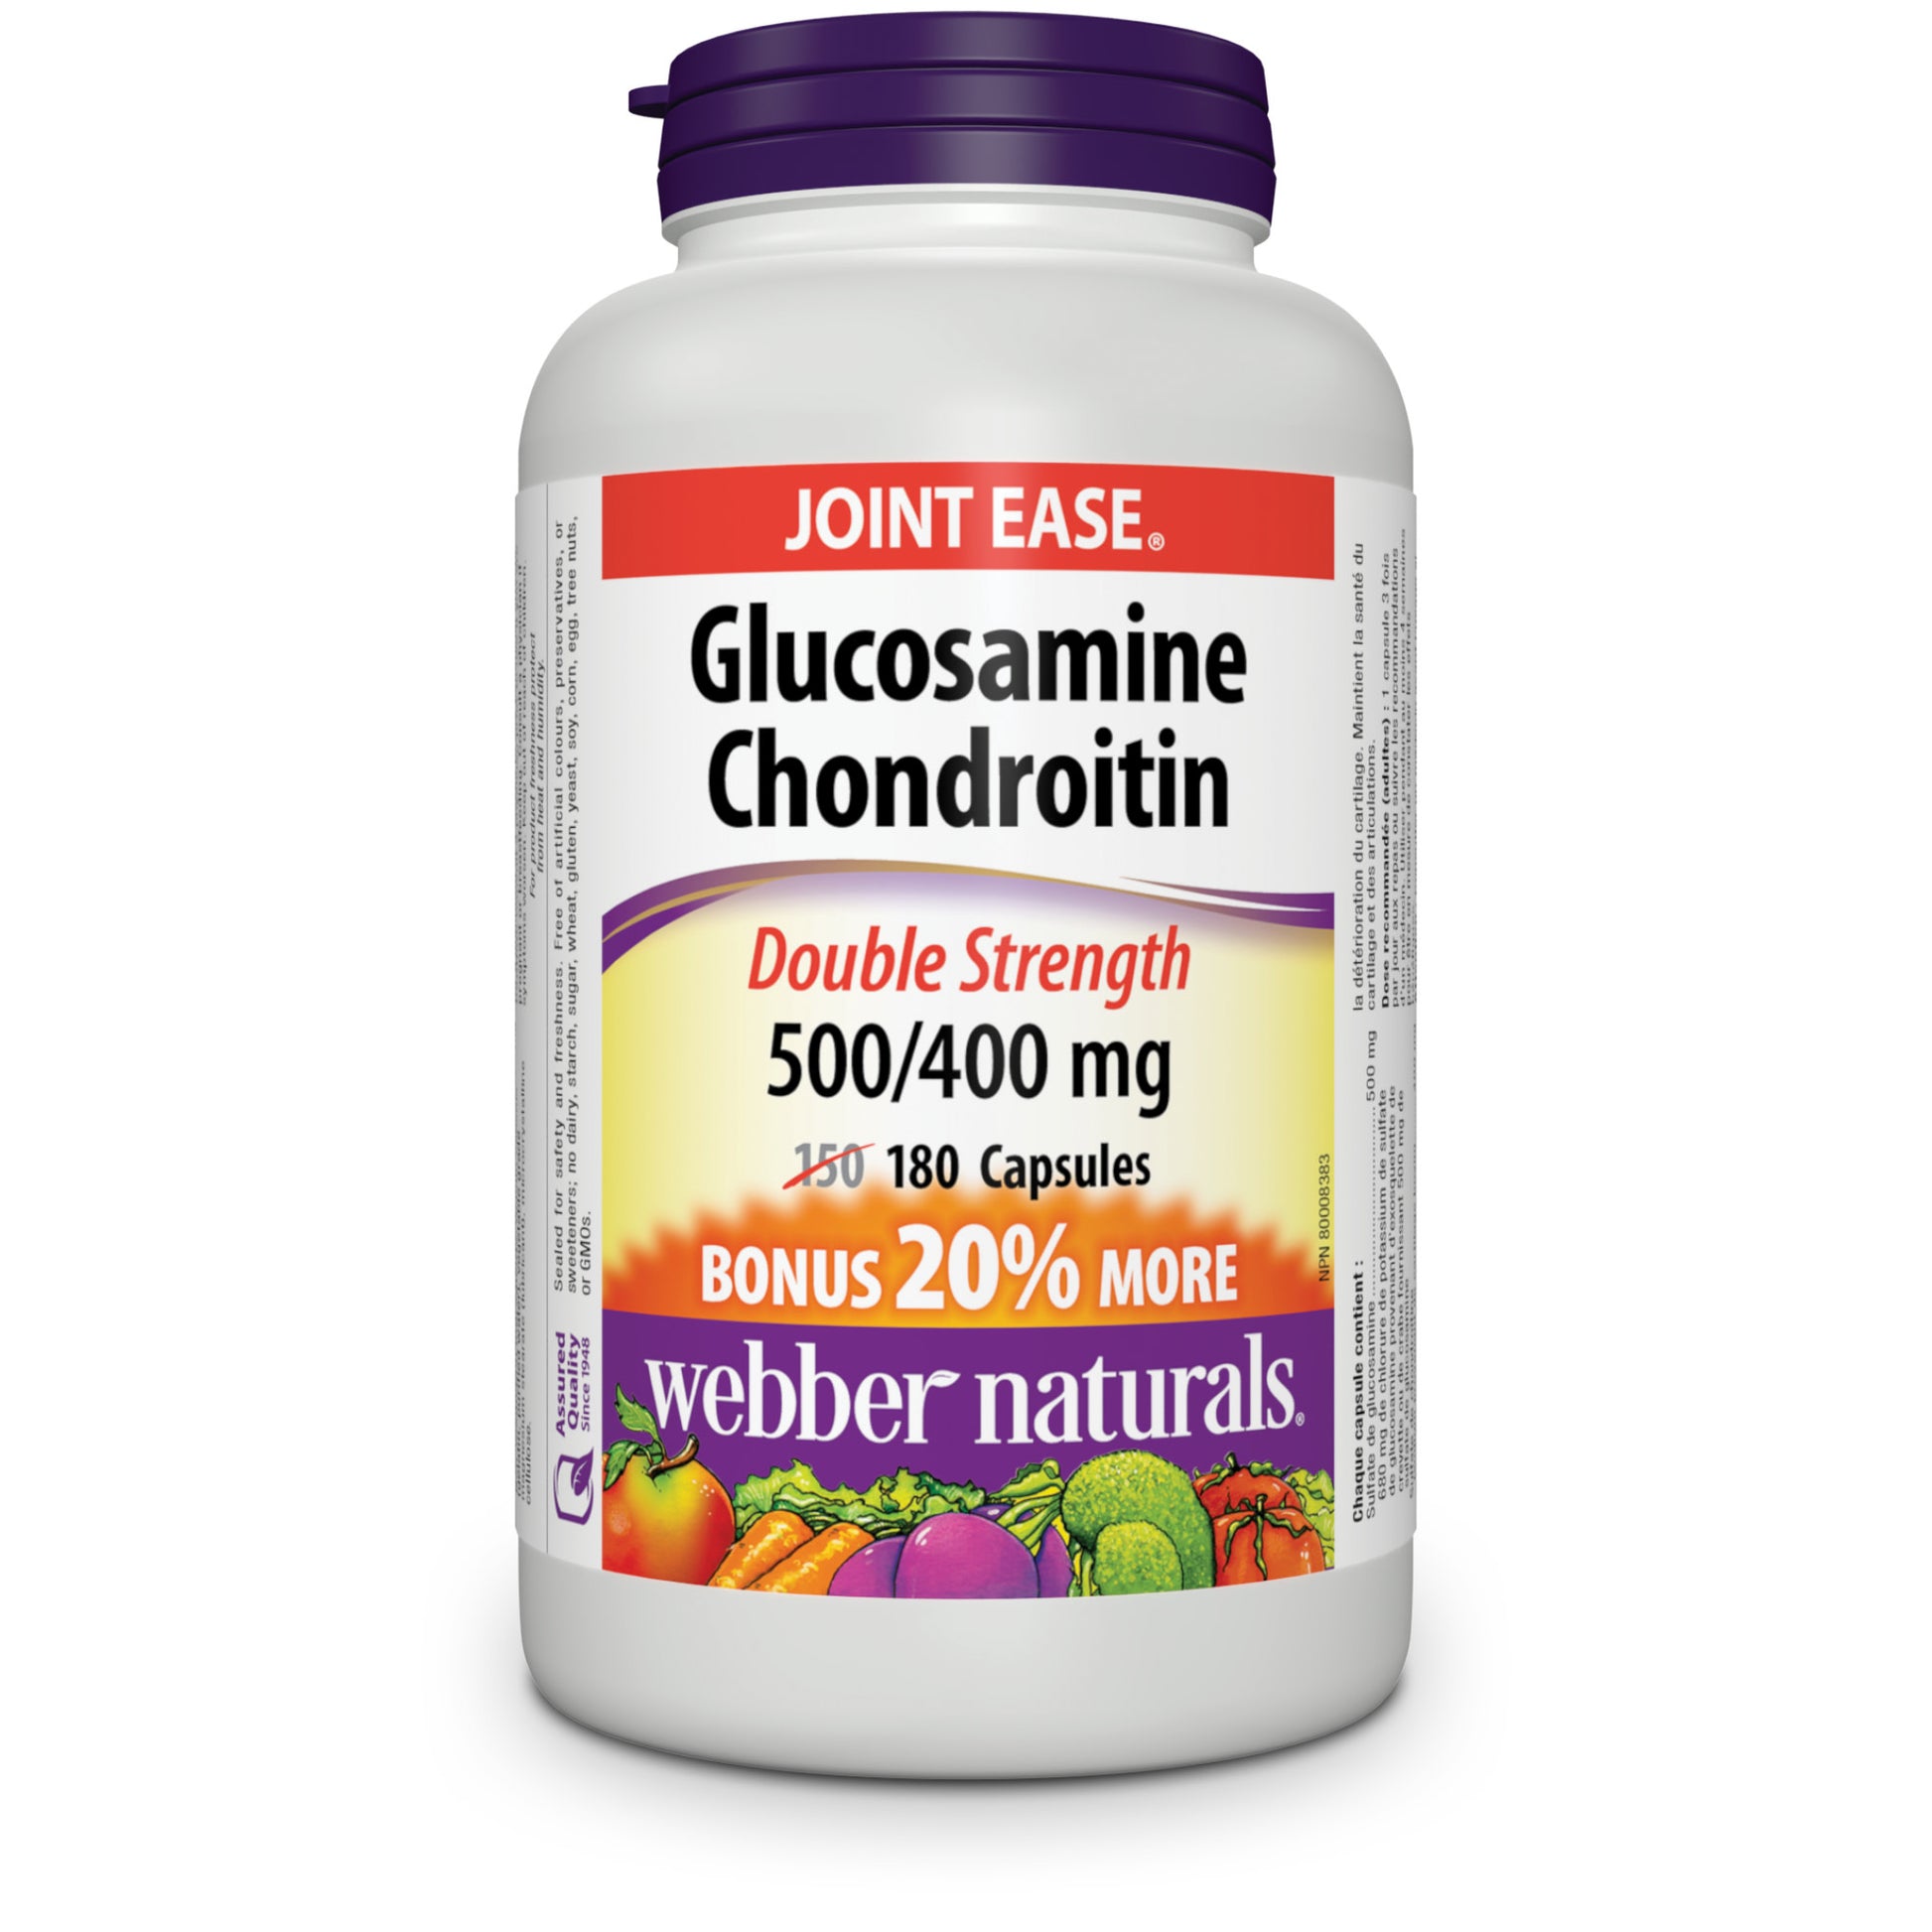 Glucosamine Chondroïtine Double concentration 500/400 mg for Webber Naturals|v|hi-res|WN3839